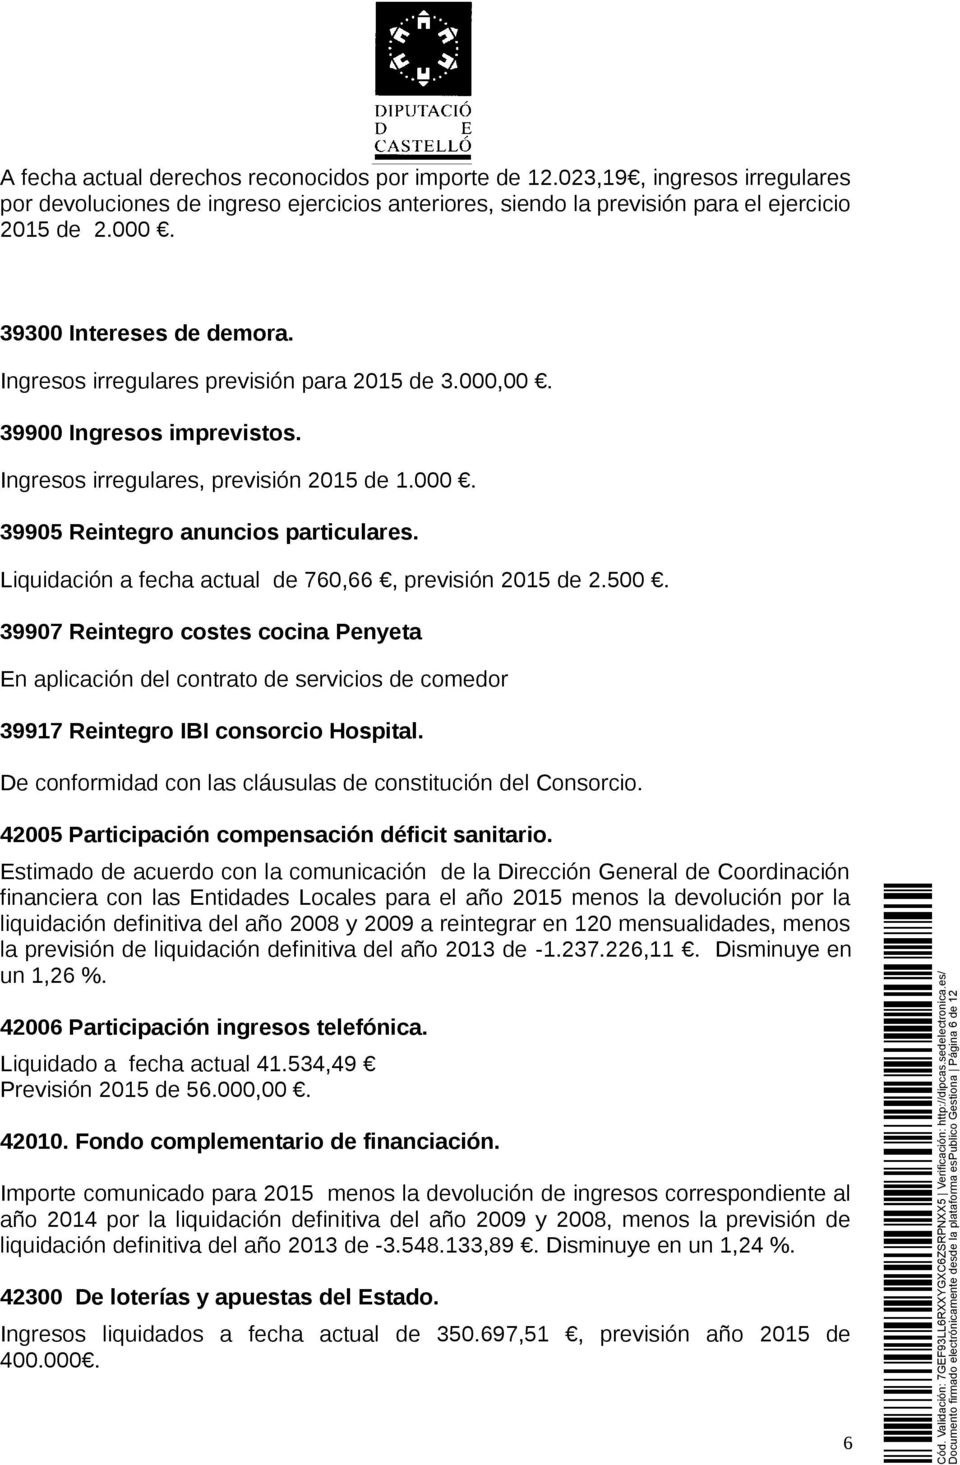 Liquidación a fecha actual de 760,66, previsión 2015 de 2.500. 39907 Reintegro costes cocina Penyeta En aplicación del contrato de servicios de comedor 39917 Reintegro IBI consorcio Hospital.